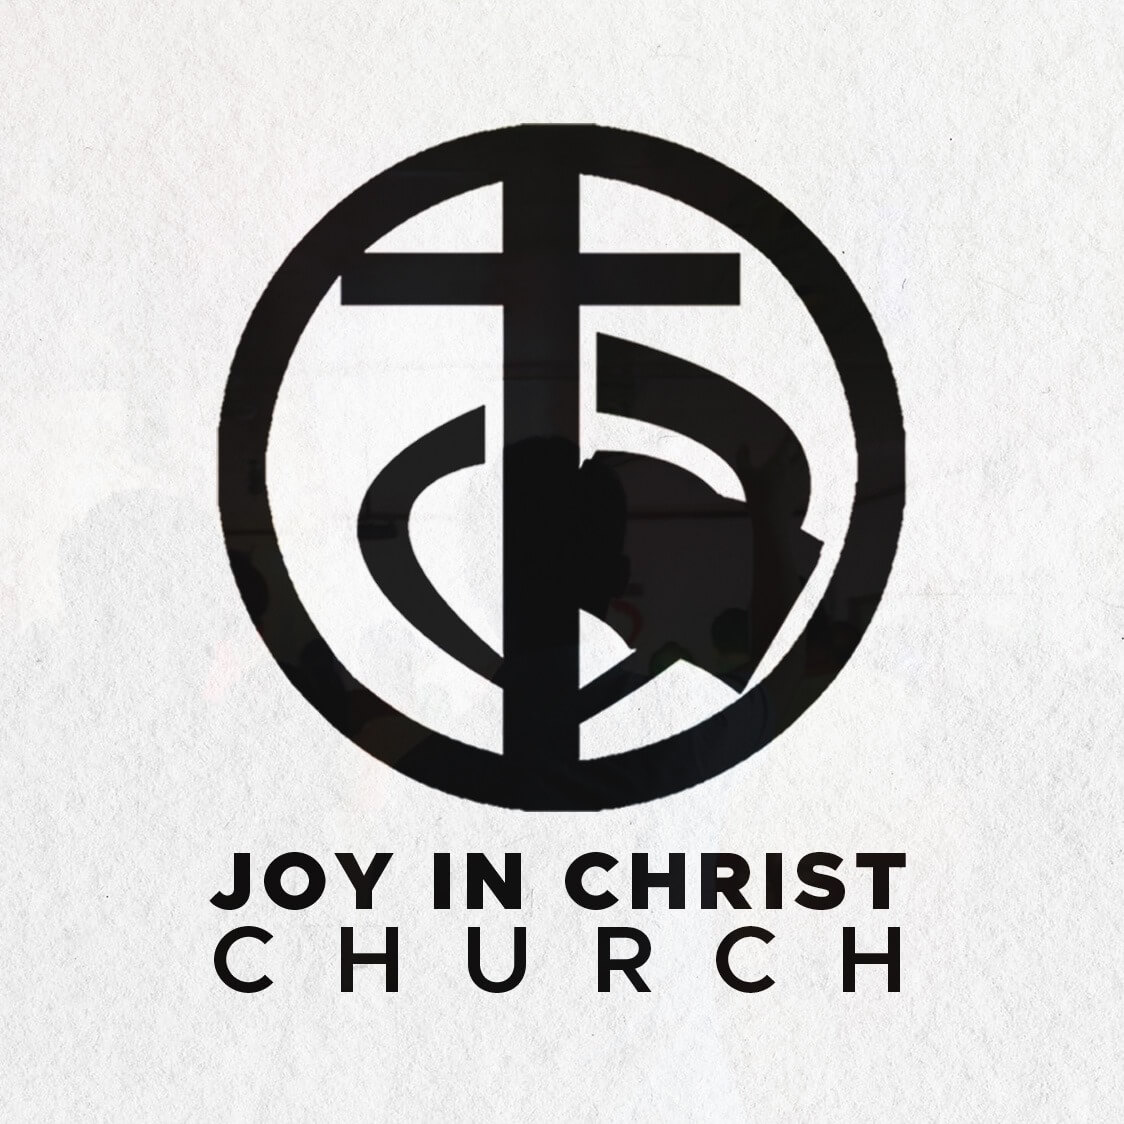 Joy in Christ Church